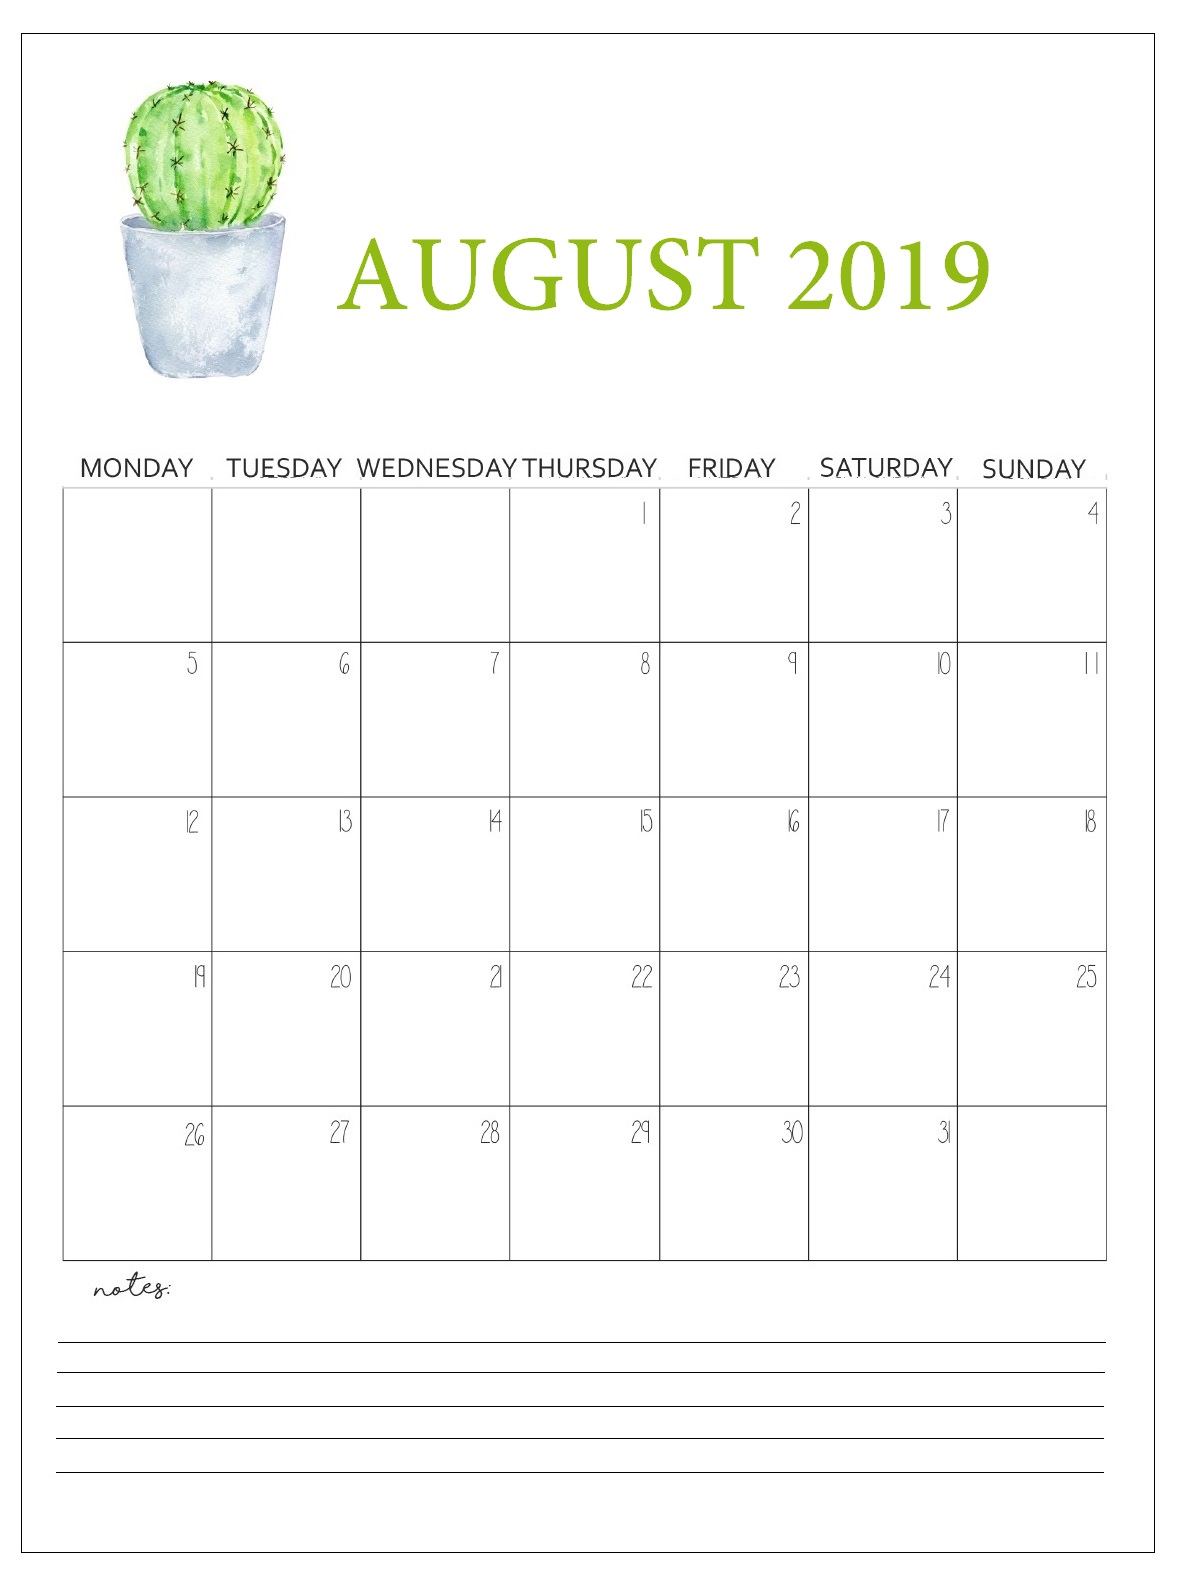 August 2019 Calendar For Office Wall